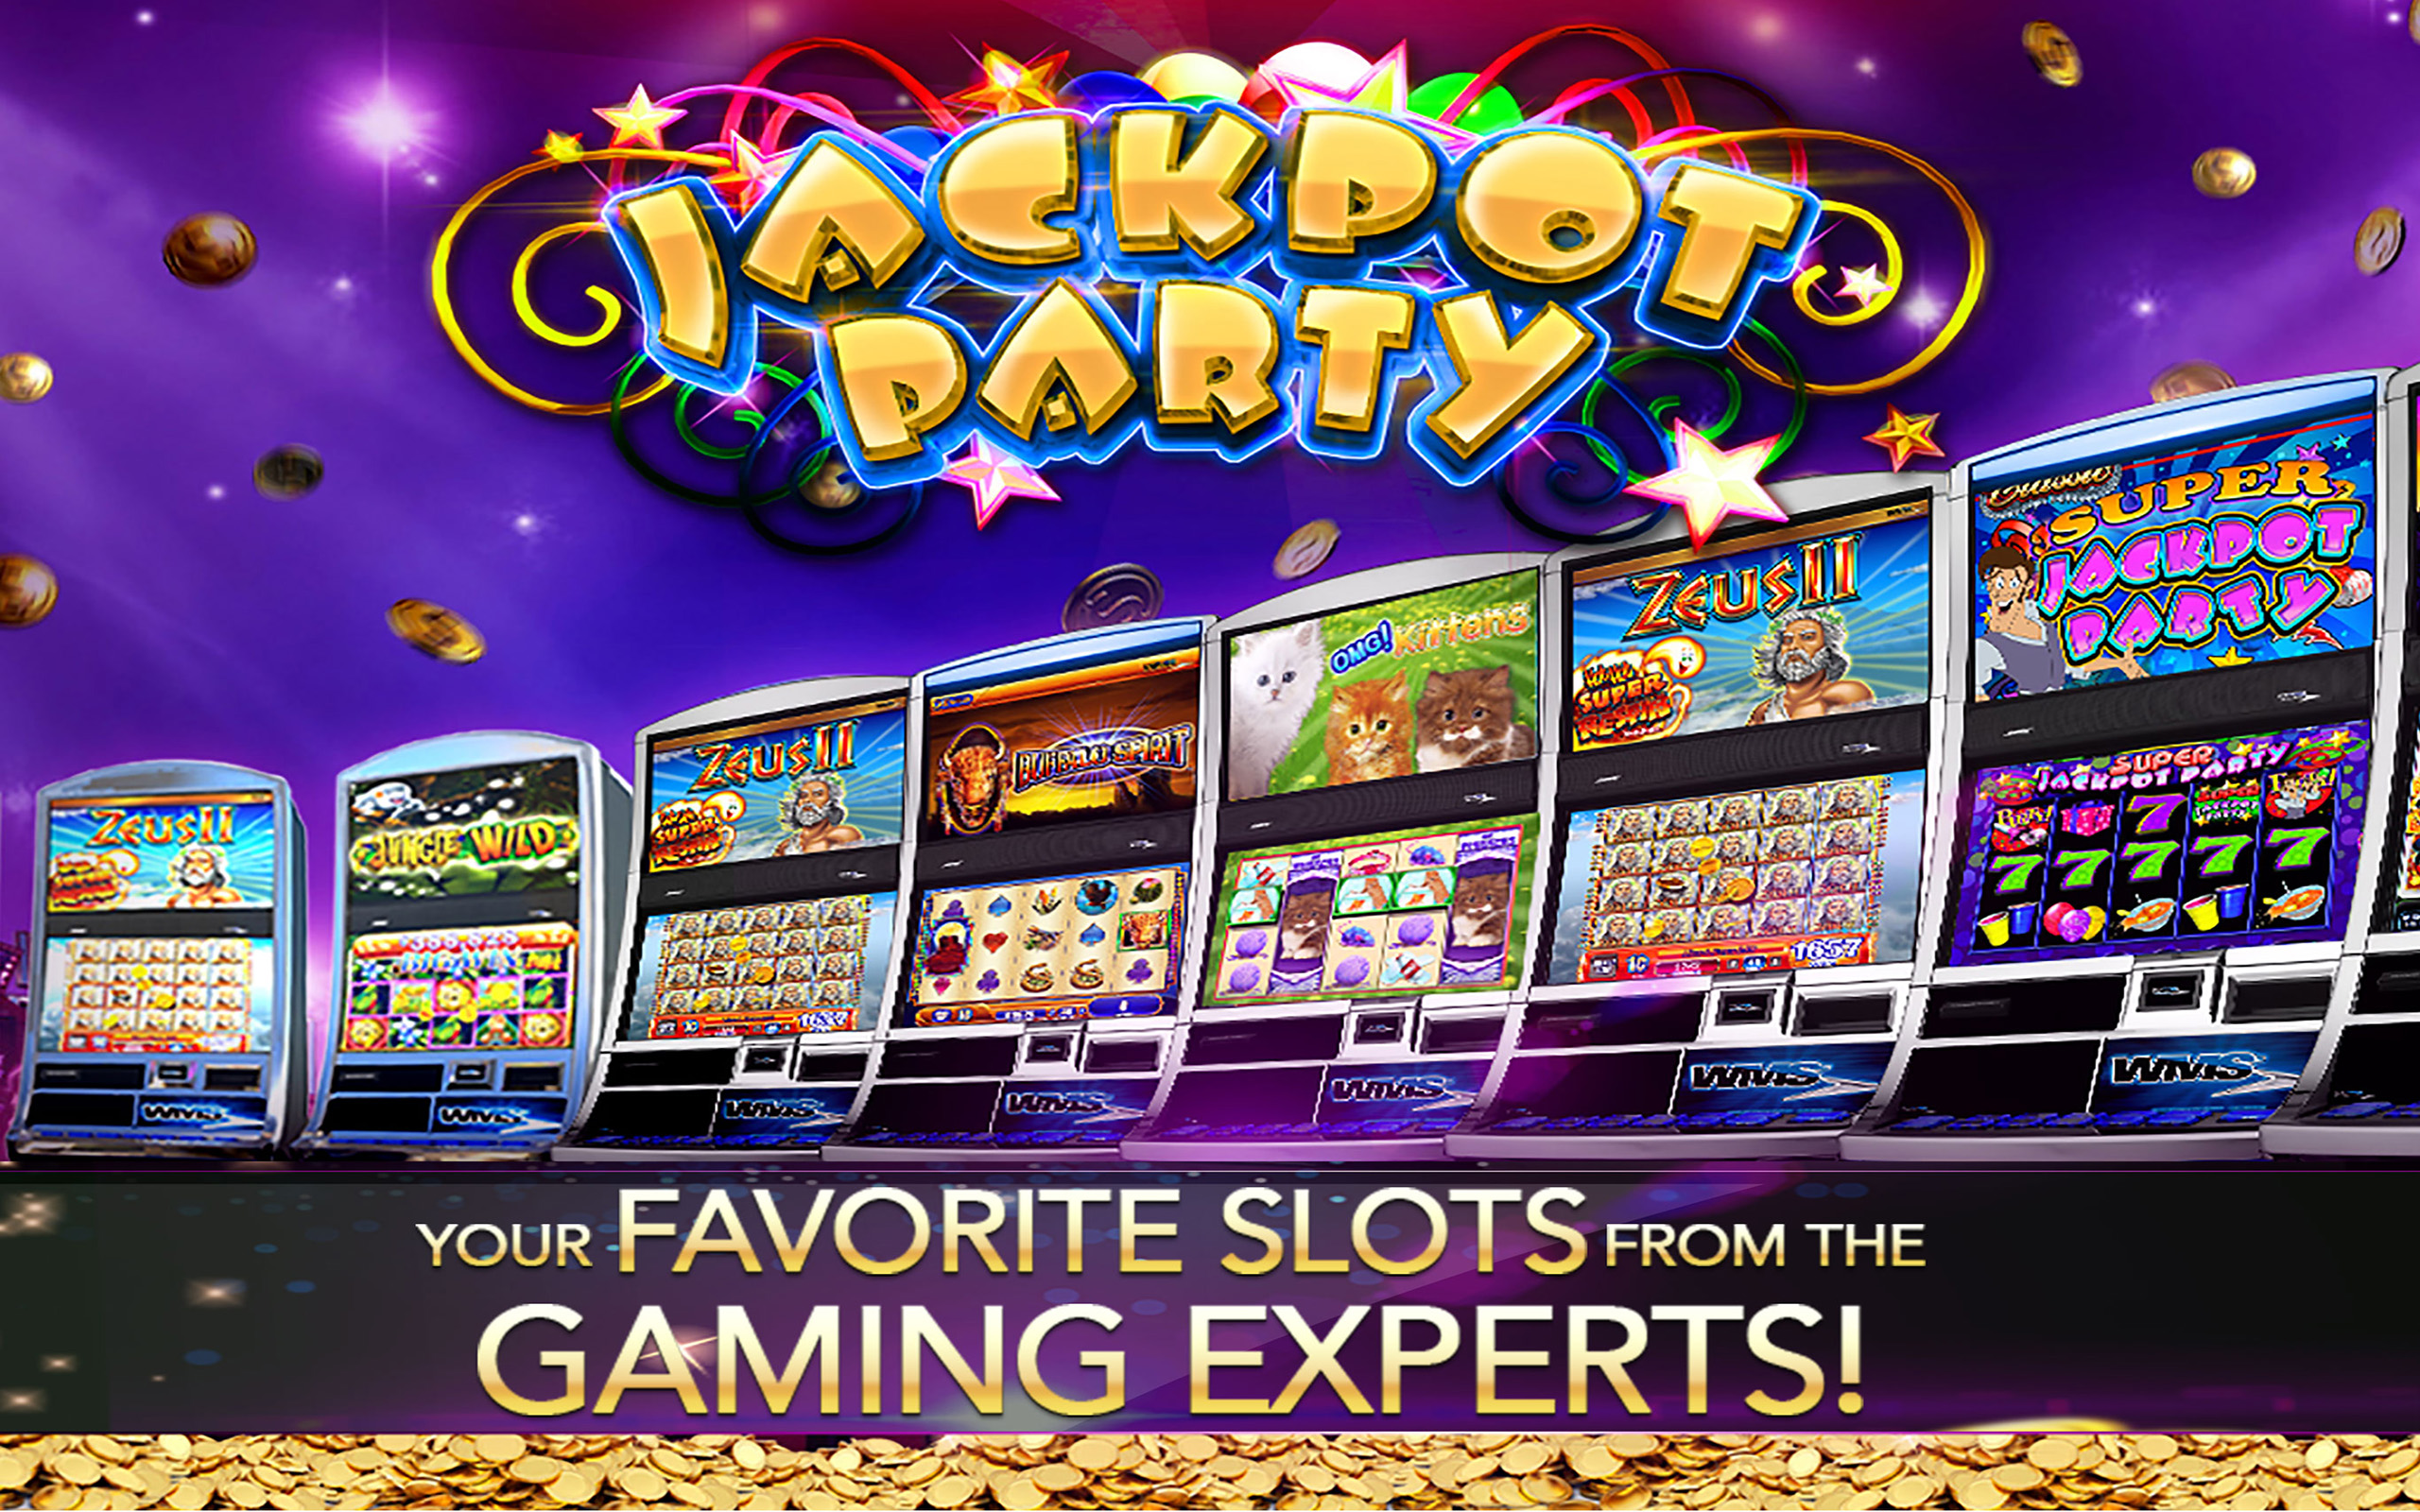 Casino slots games